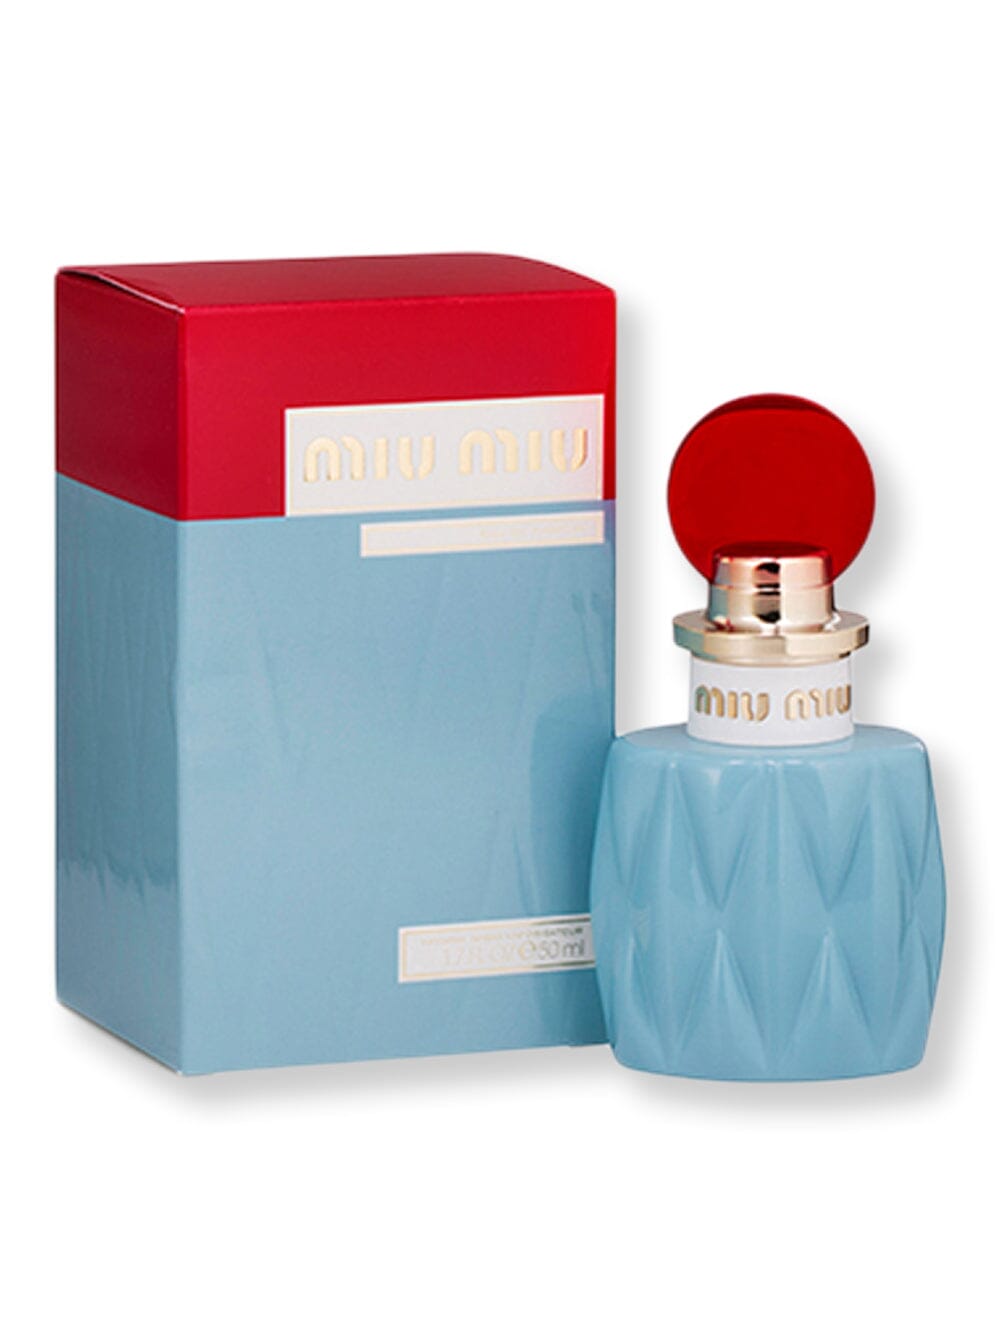 Miuccia Prada Miuccia Prada Miu Miu EDP Spray 1.7 oz50 ml Perfume 